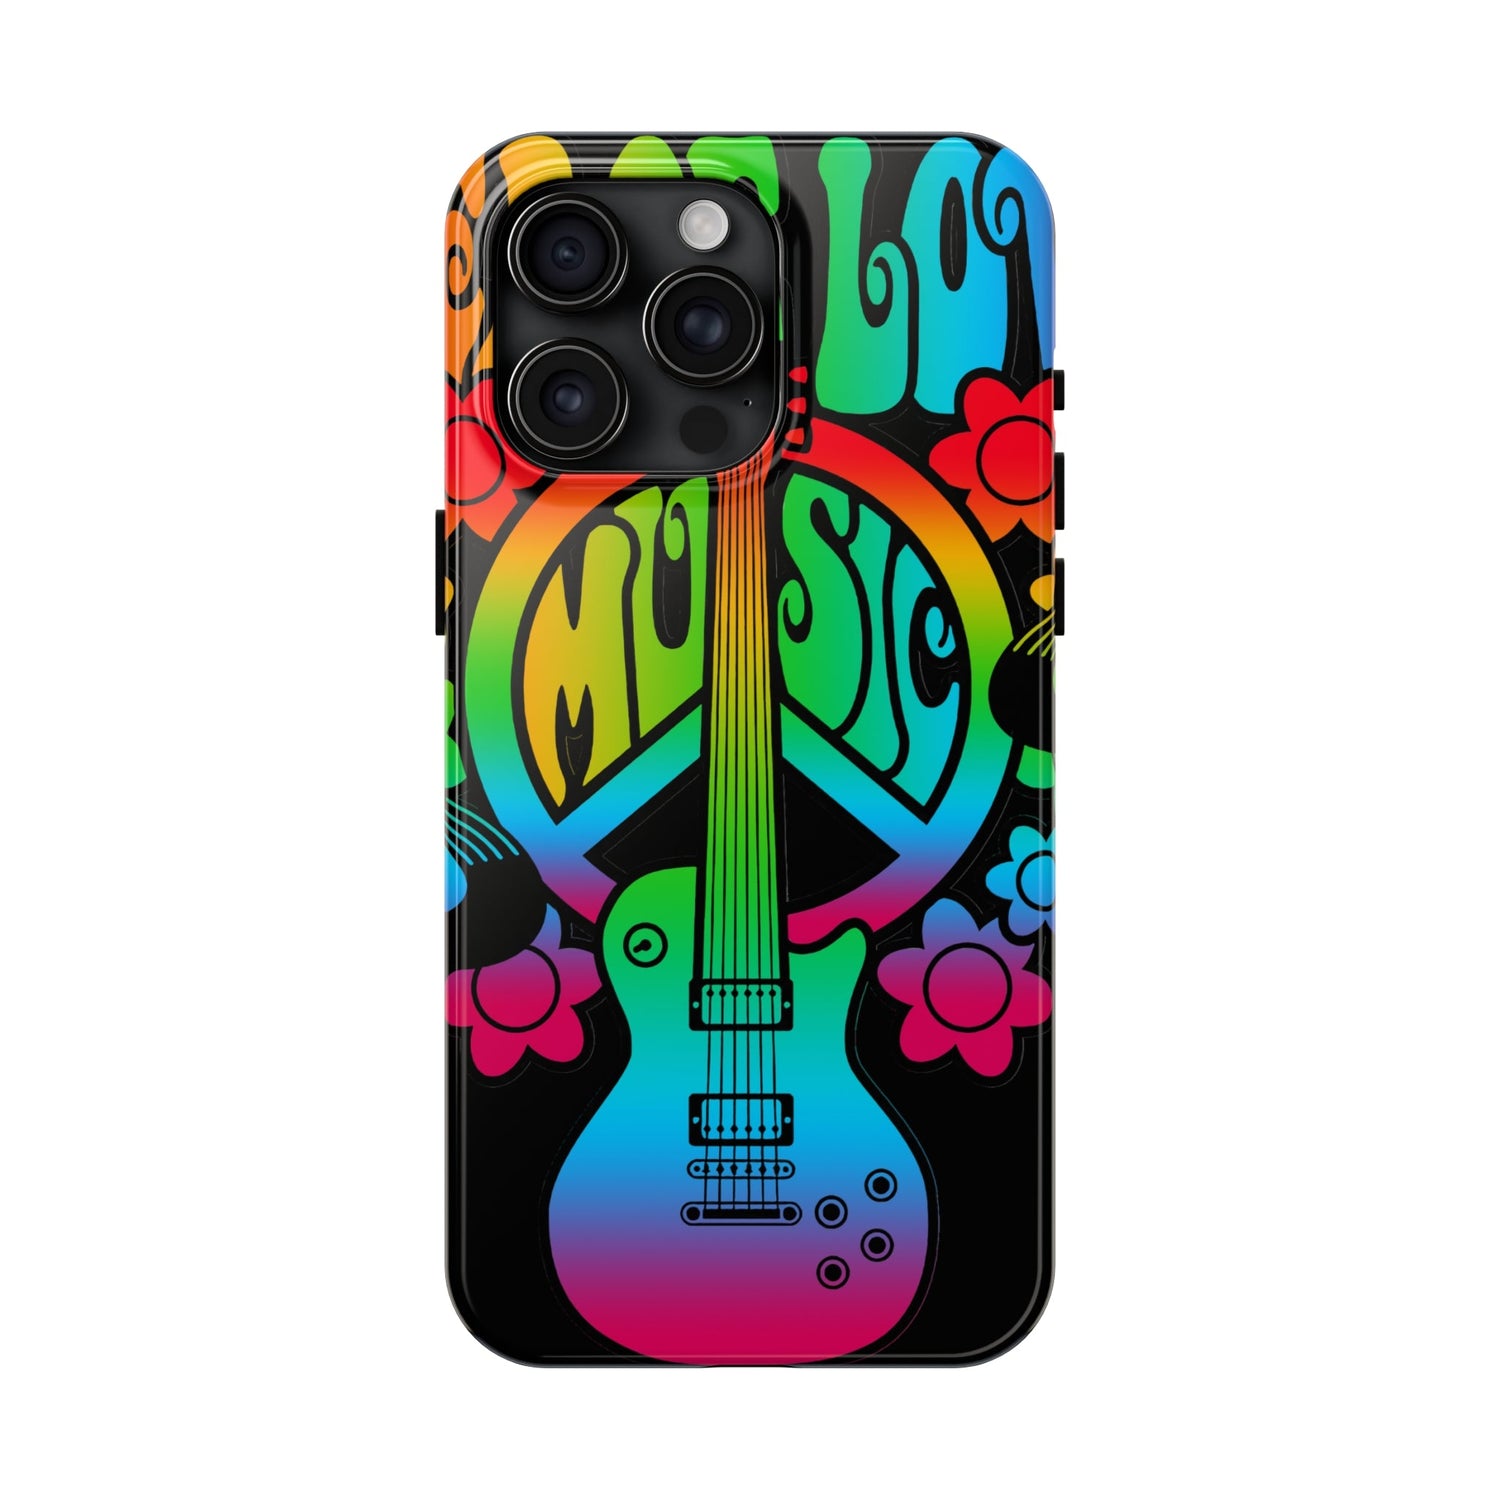 Hippie Dippie iPhone "Tough Case" Design by TheGlassyLass.com